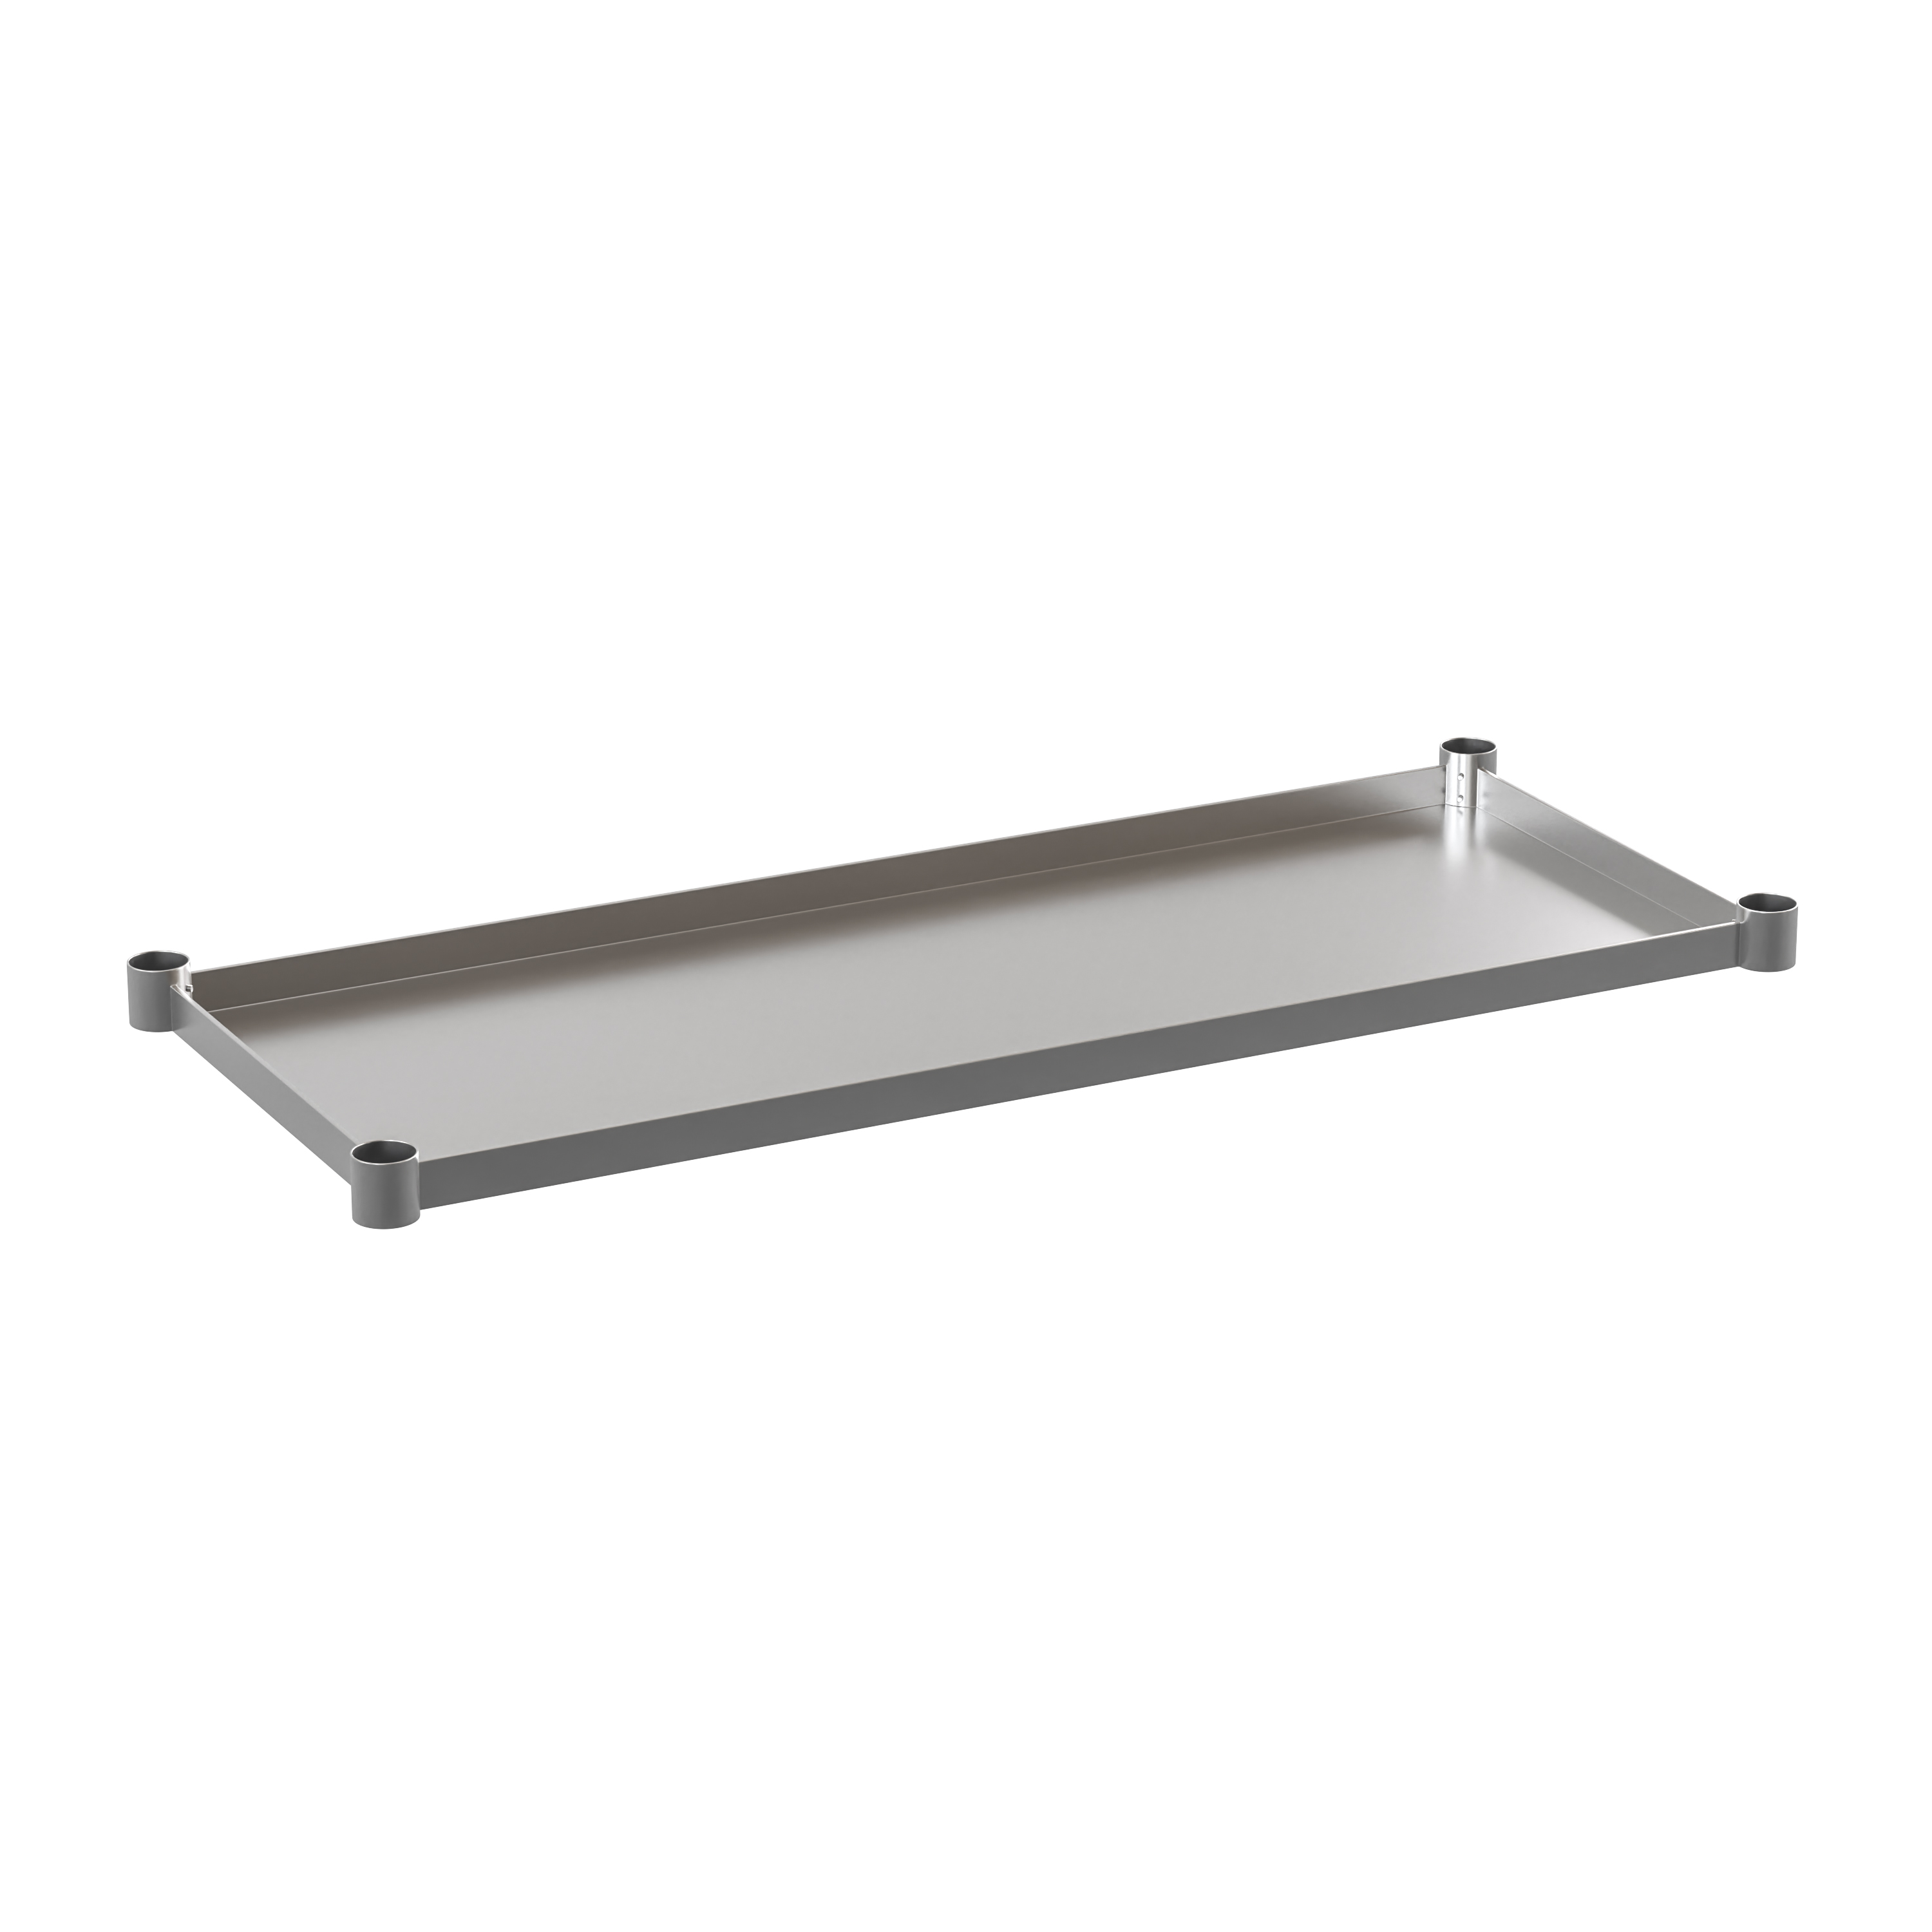 Flash Furniture NH-GU-2448-GG Galvanized Adjustable Under Shelf for 24" x 48" Stainless Steel Tables